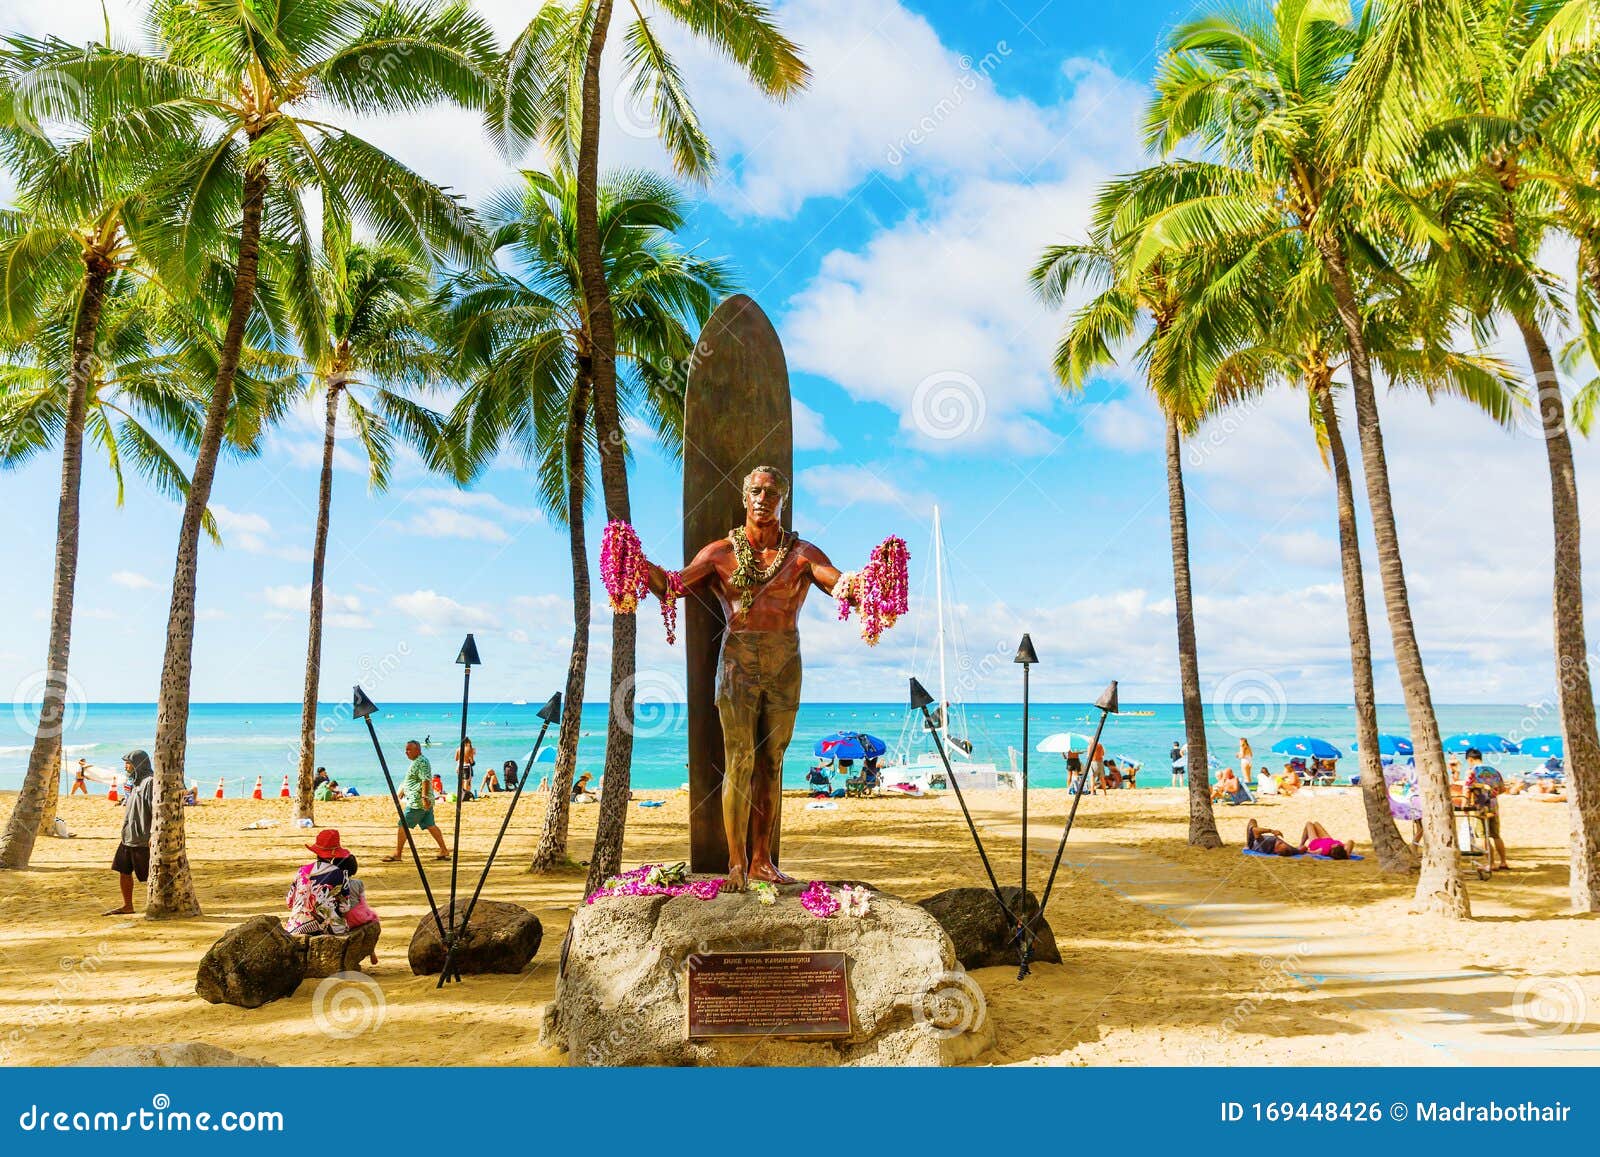 Statua di Duke Kahanamoku sulla spiaggia di Waikiki a Honolulu, Oahu, Hawaii. Honolulu, Oahu, Hawaii - 04 Novembre 2019: Statua di Duke Kahanamoku sulla spiaggia di Waikiki con persone non identificate Kahanamoku è un nuotatore leggendario che ha reso popolare l'antico sport hawaiano del surf